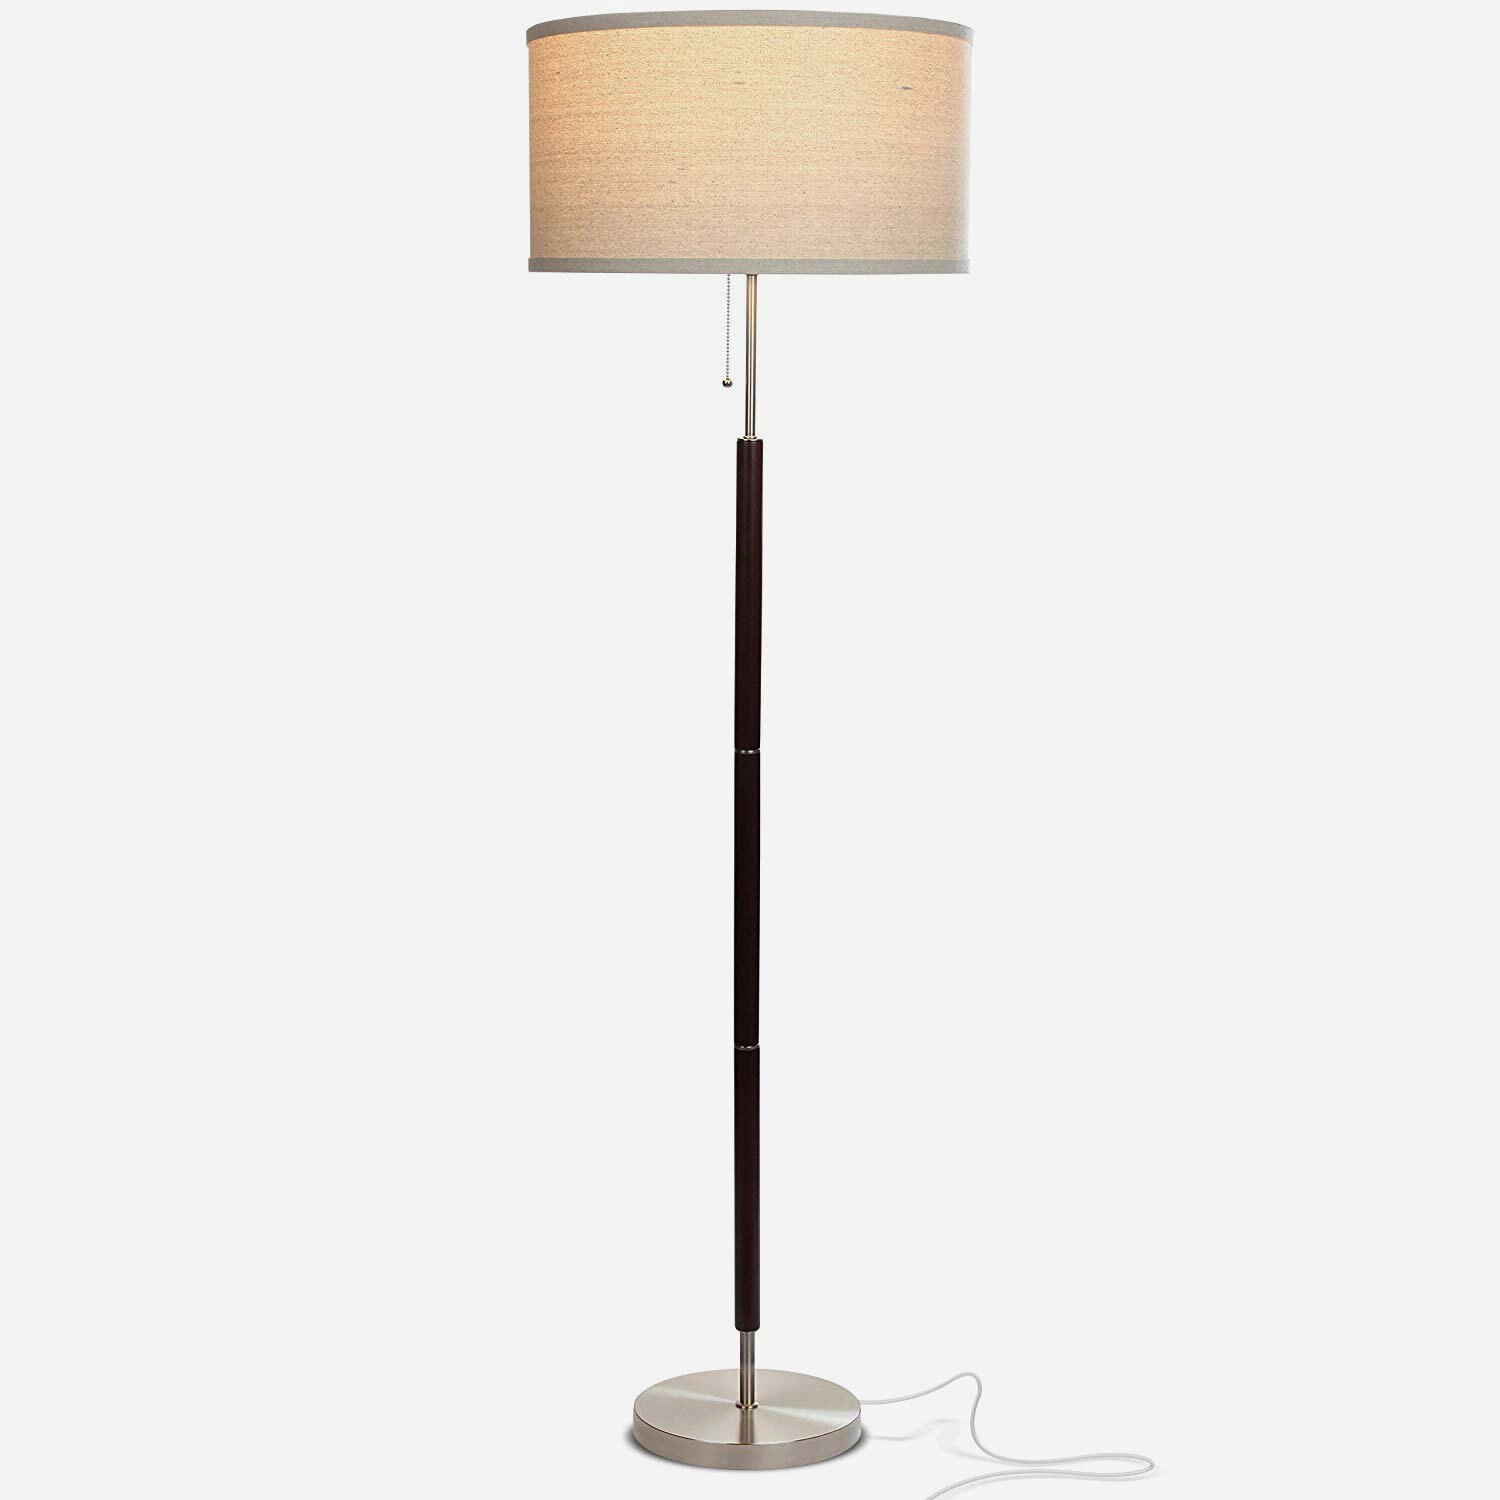 Carter Floor Led Mid Century Modern Floor Lamp Walnut Wood Finish pertaining to dimensions 1500 X 1500